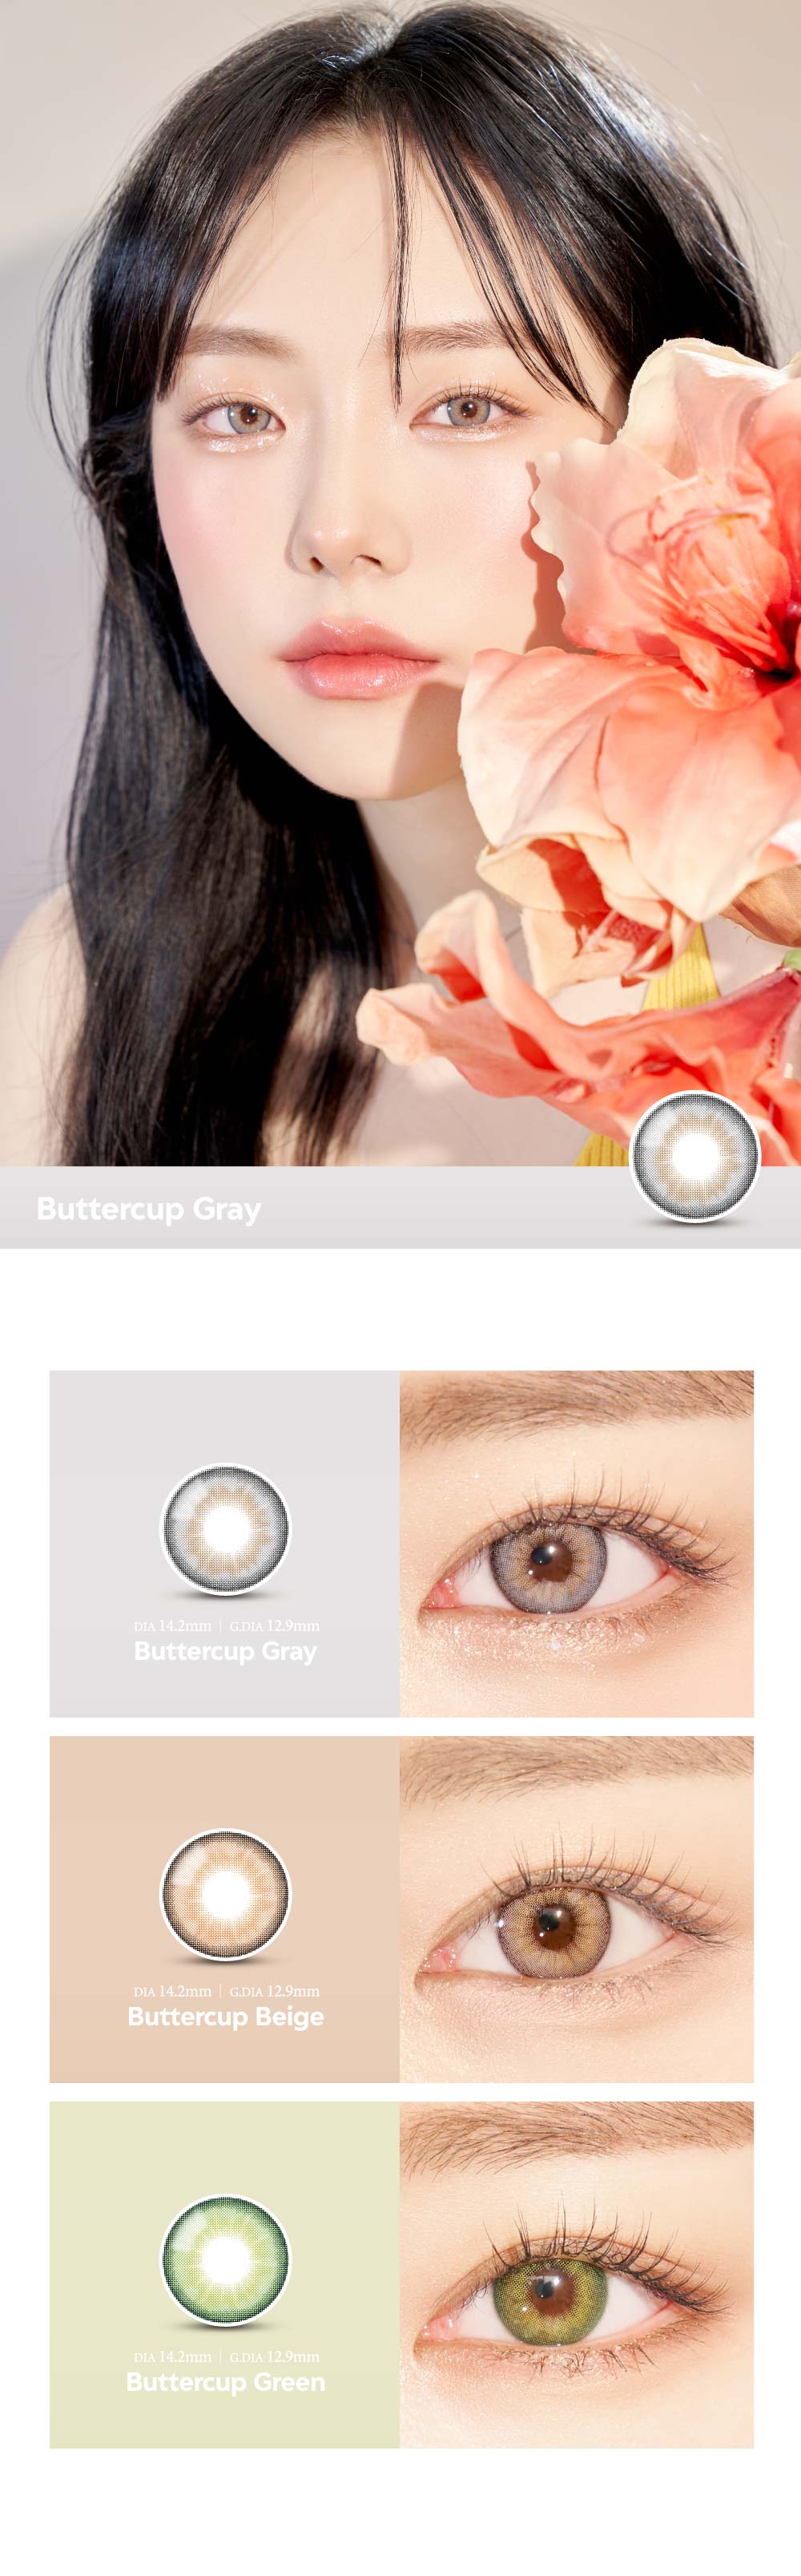 buttercup-gray-korean-colord-lenses09.jpg